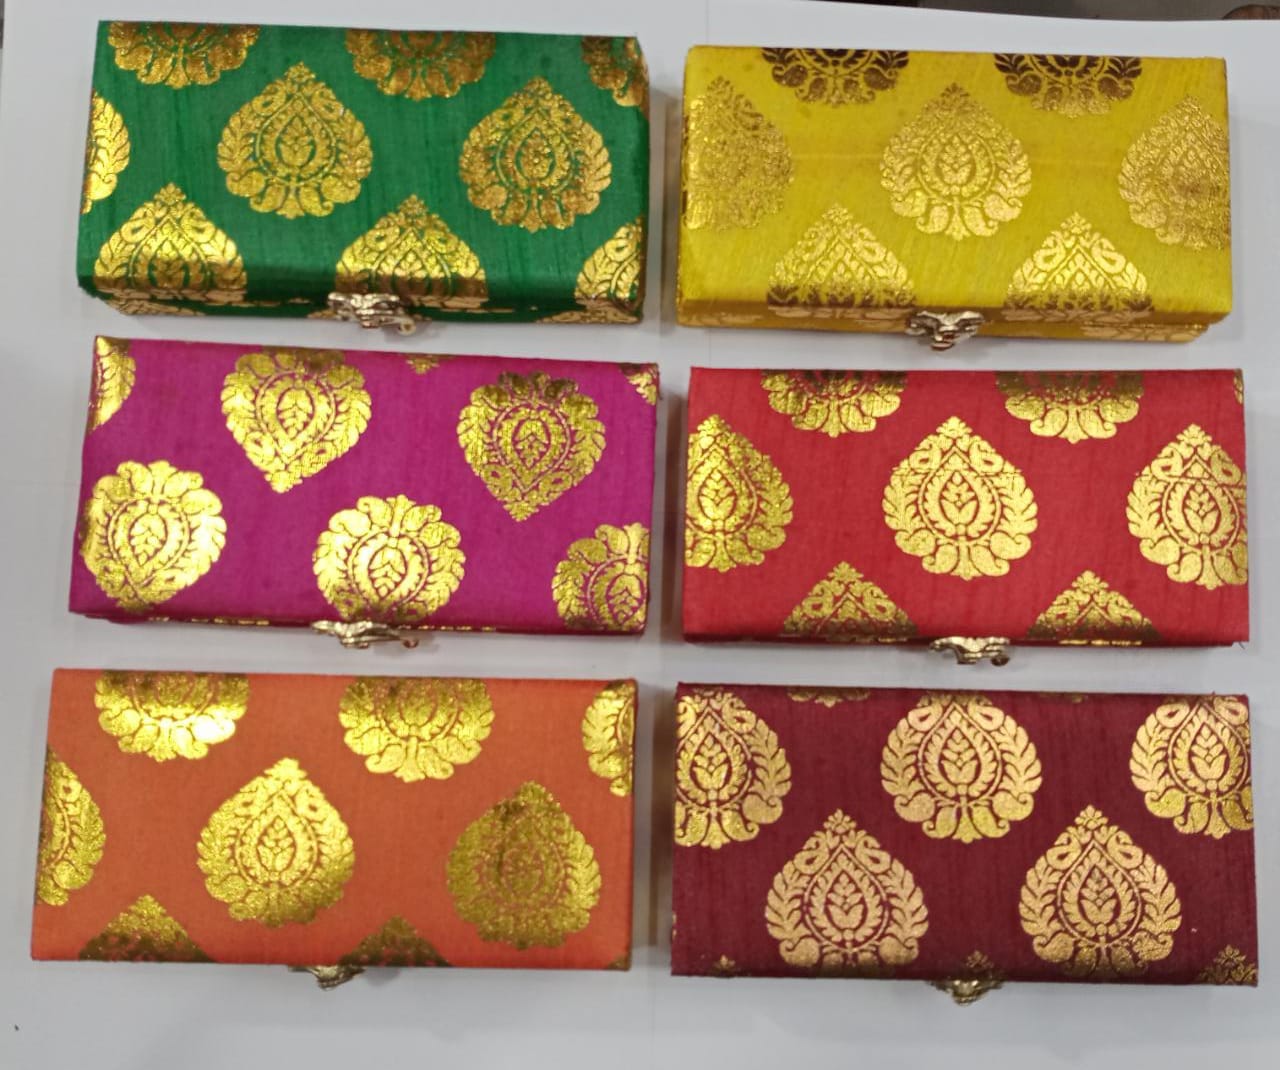 LAMANSH Cash box Assorted colors / Fabric & Wood / 5 LAMANSH® Pack of 5 (4*8 inch) Printed Jaipuri Cash Box, Shagun Box, Gift Box, Gaddi Box, Jewellery Box for Wedding Gift / Low cost Return Gifts 🎁 for Guests